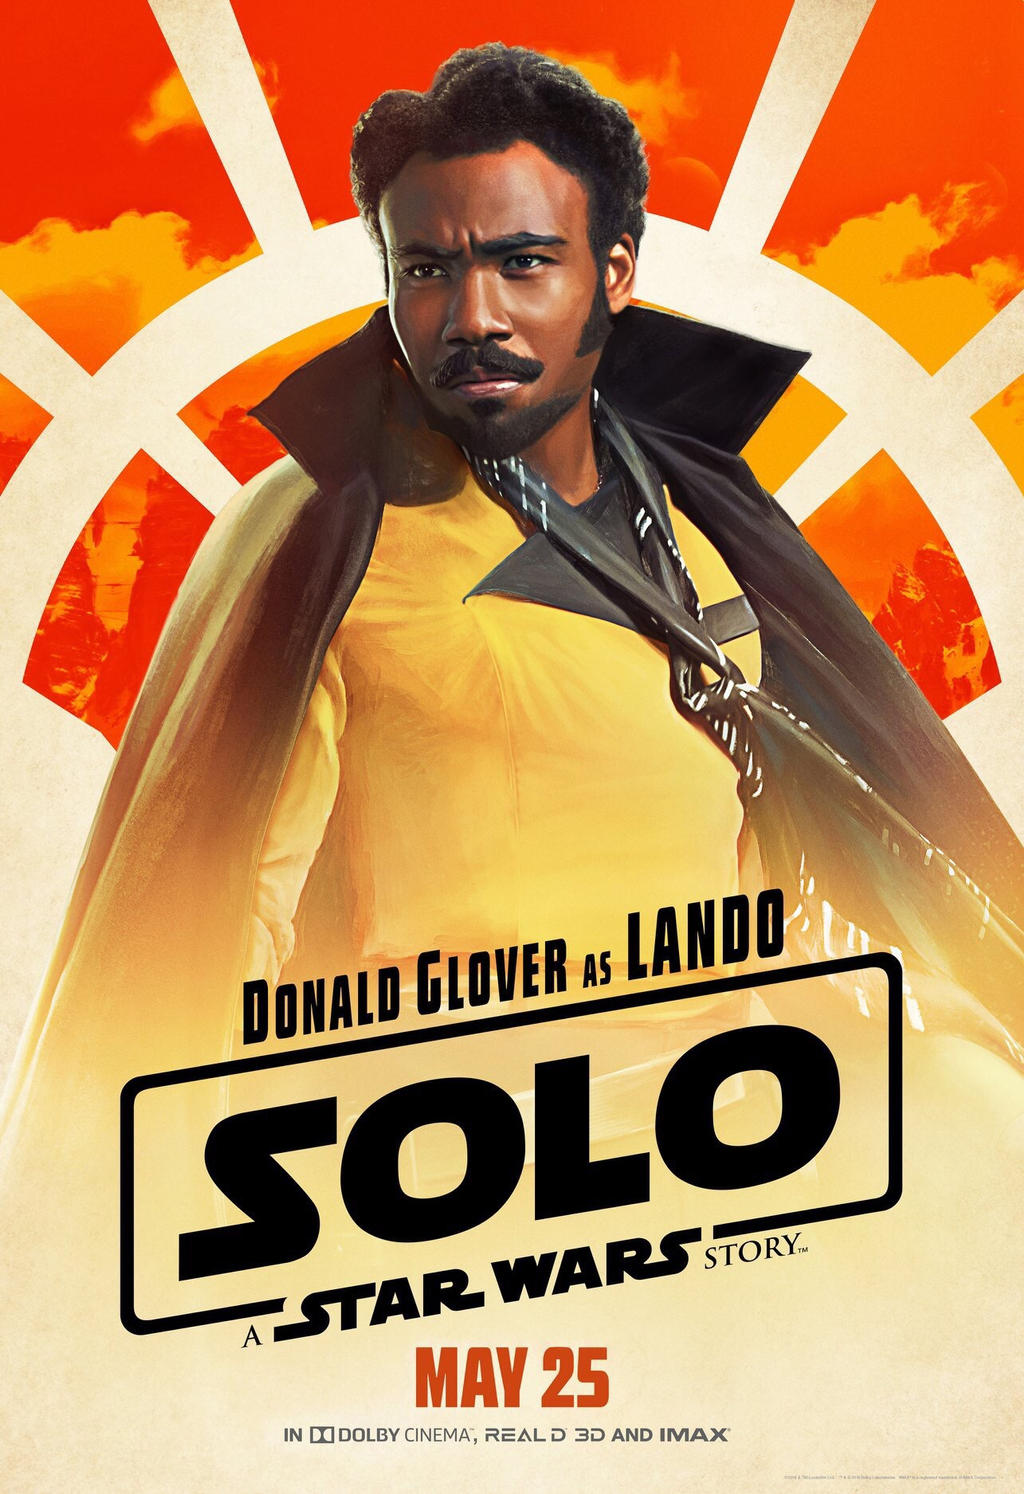 Donald Glover As Lando Calrissian Star Wars Art Wallpapers